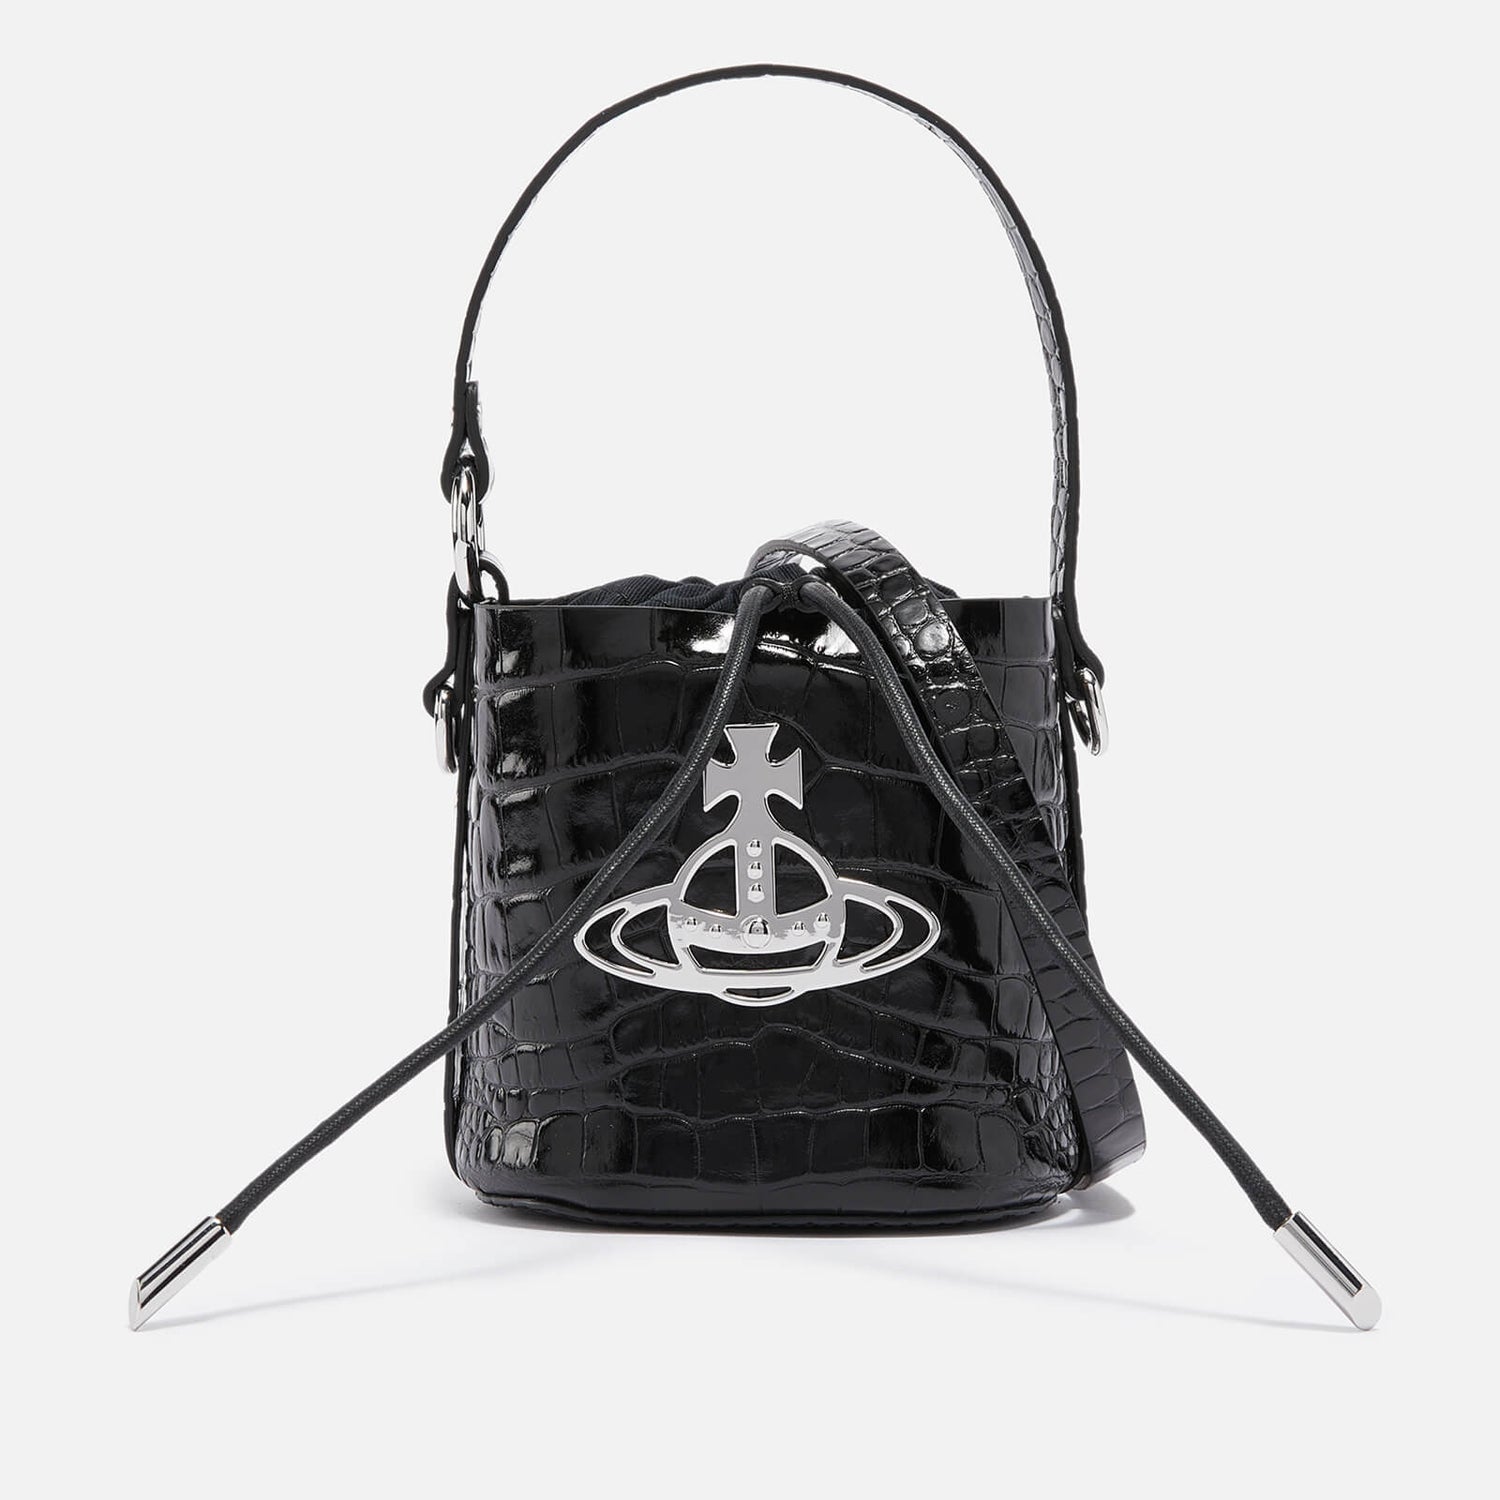 Vivienne Westwood Daisy Drawstring Croc-Effect Leather Bag